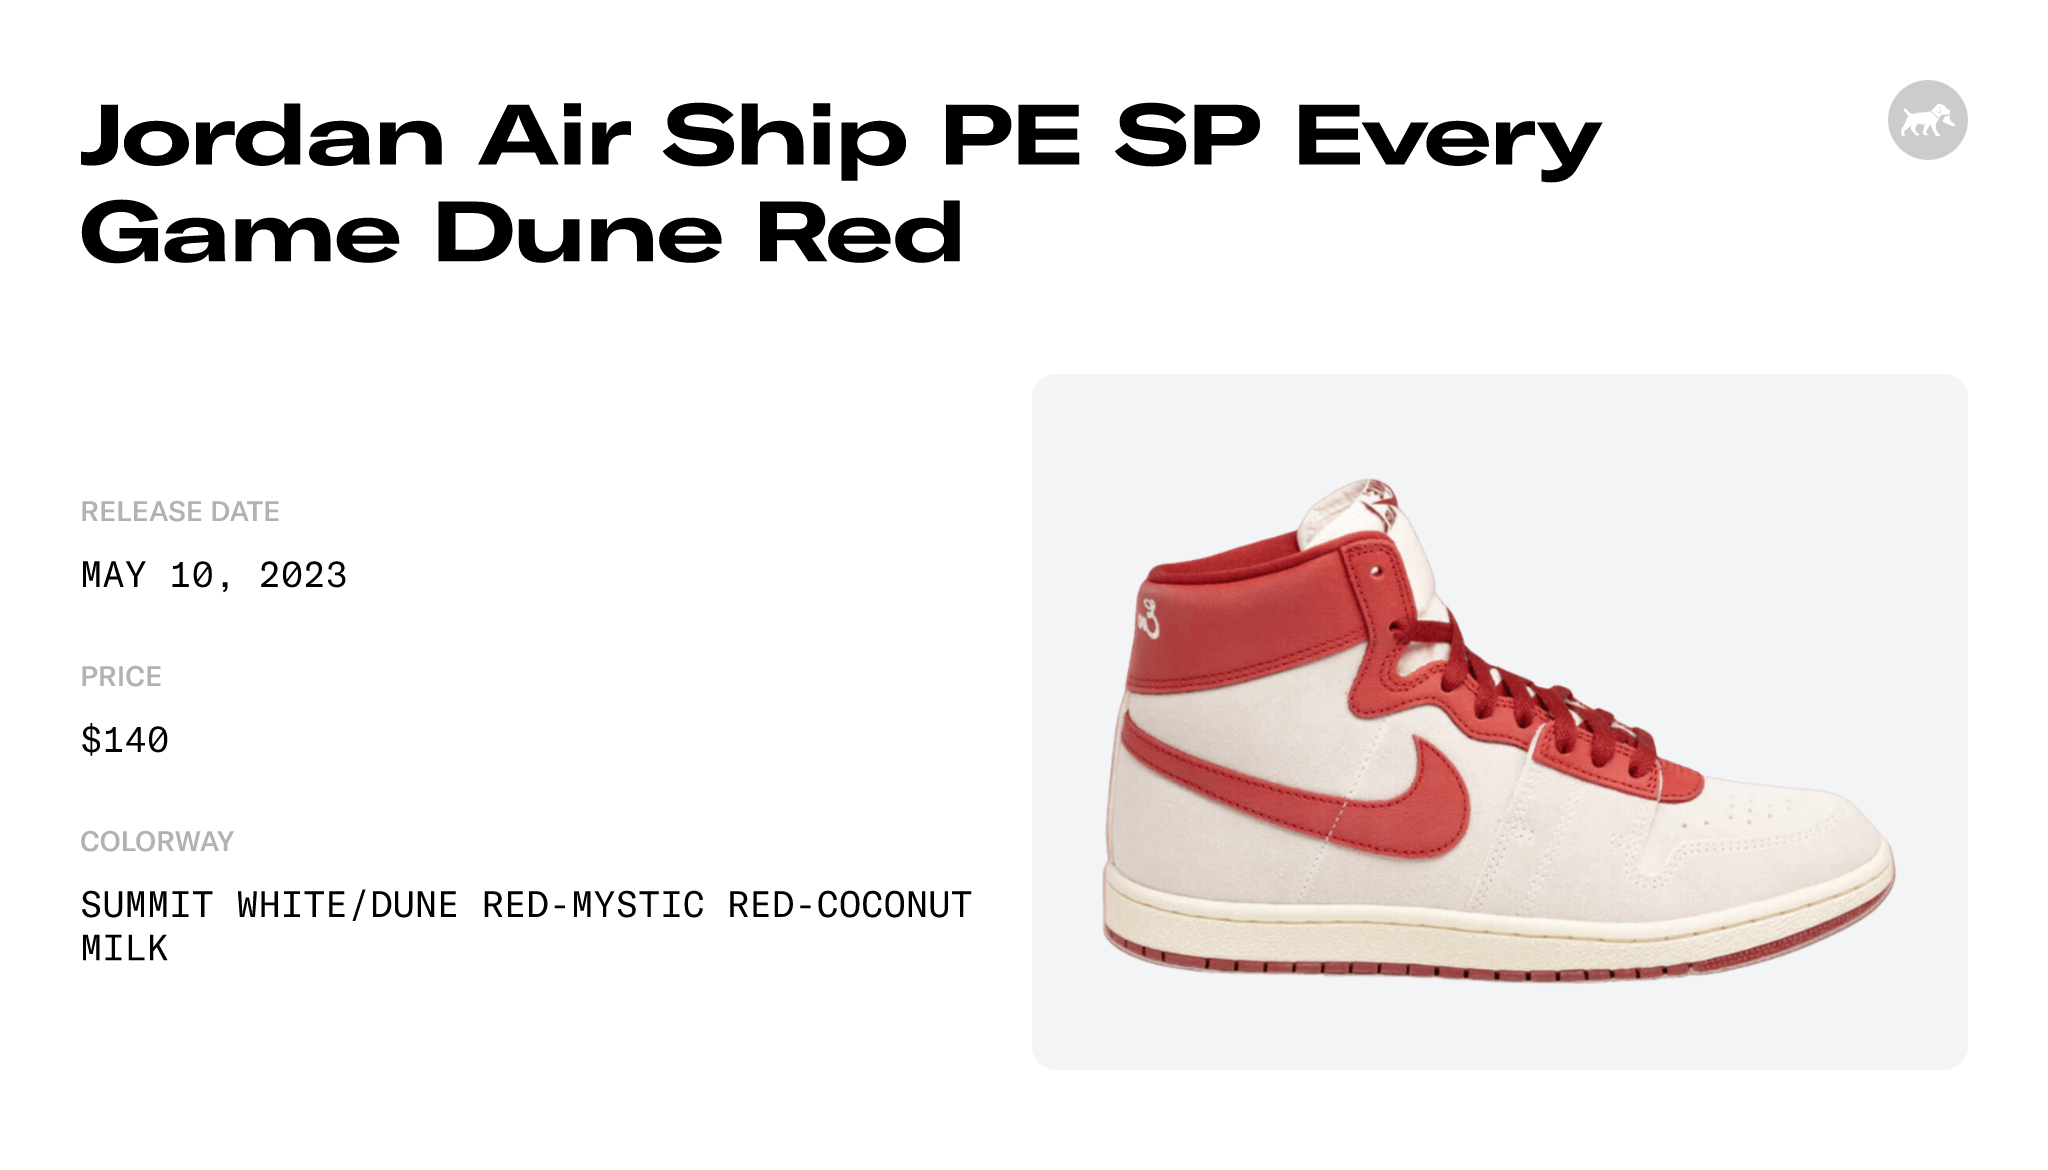 Jordan Air Ship PE SP Every Game Dune Red Raffles and Release Date